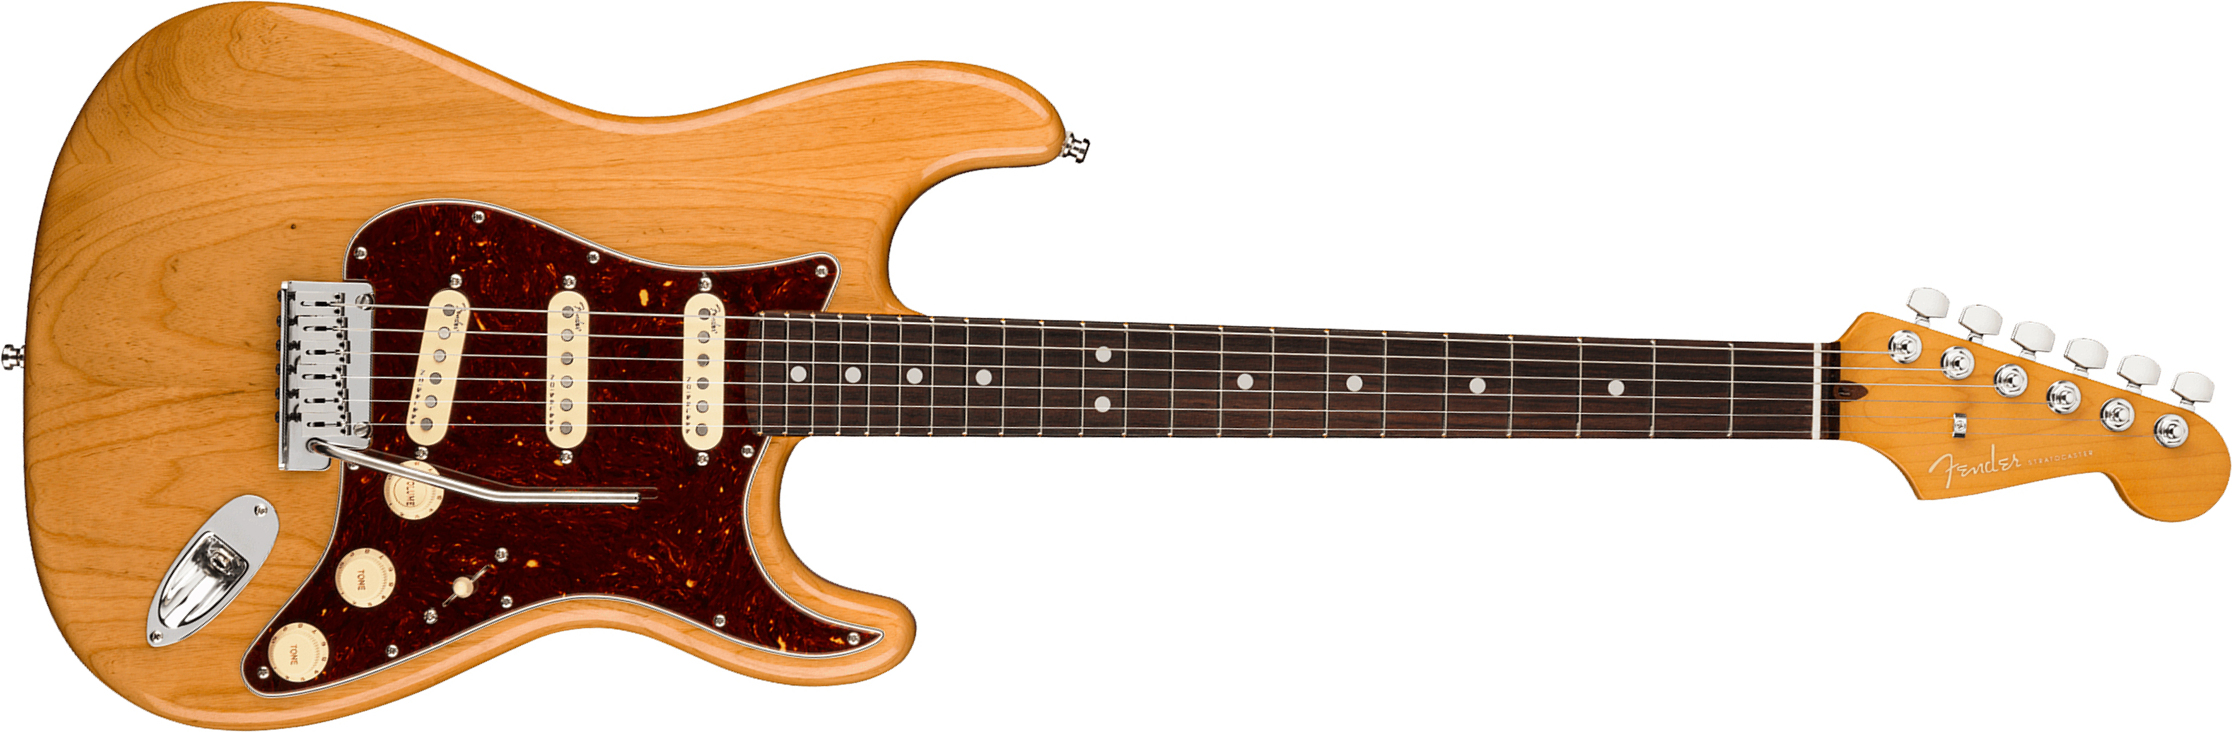 Fender Strat American Ultra 2019 Usa Rw - Aged Natural - Guitarra eléctrica con forma de str. - Main picture